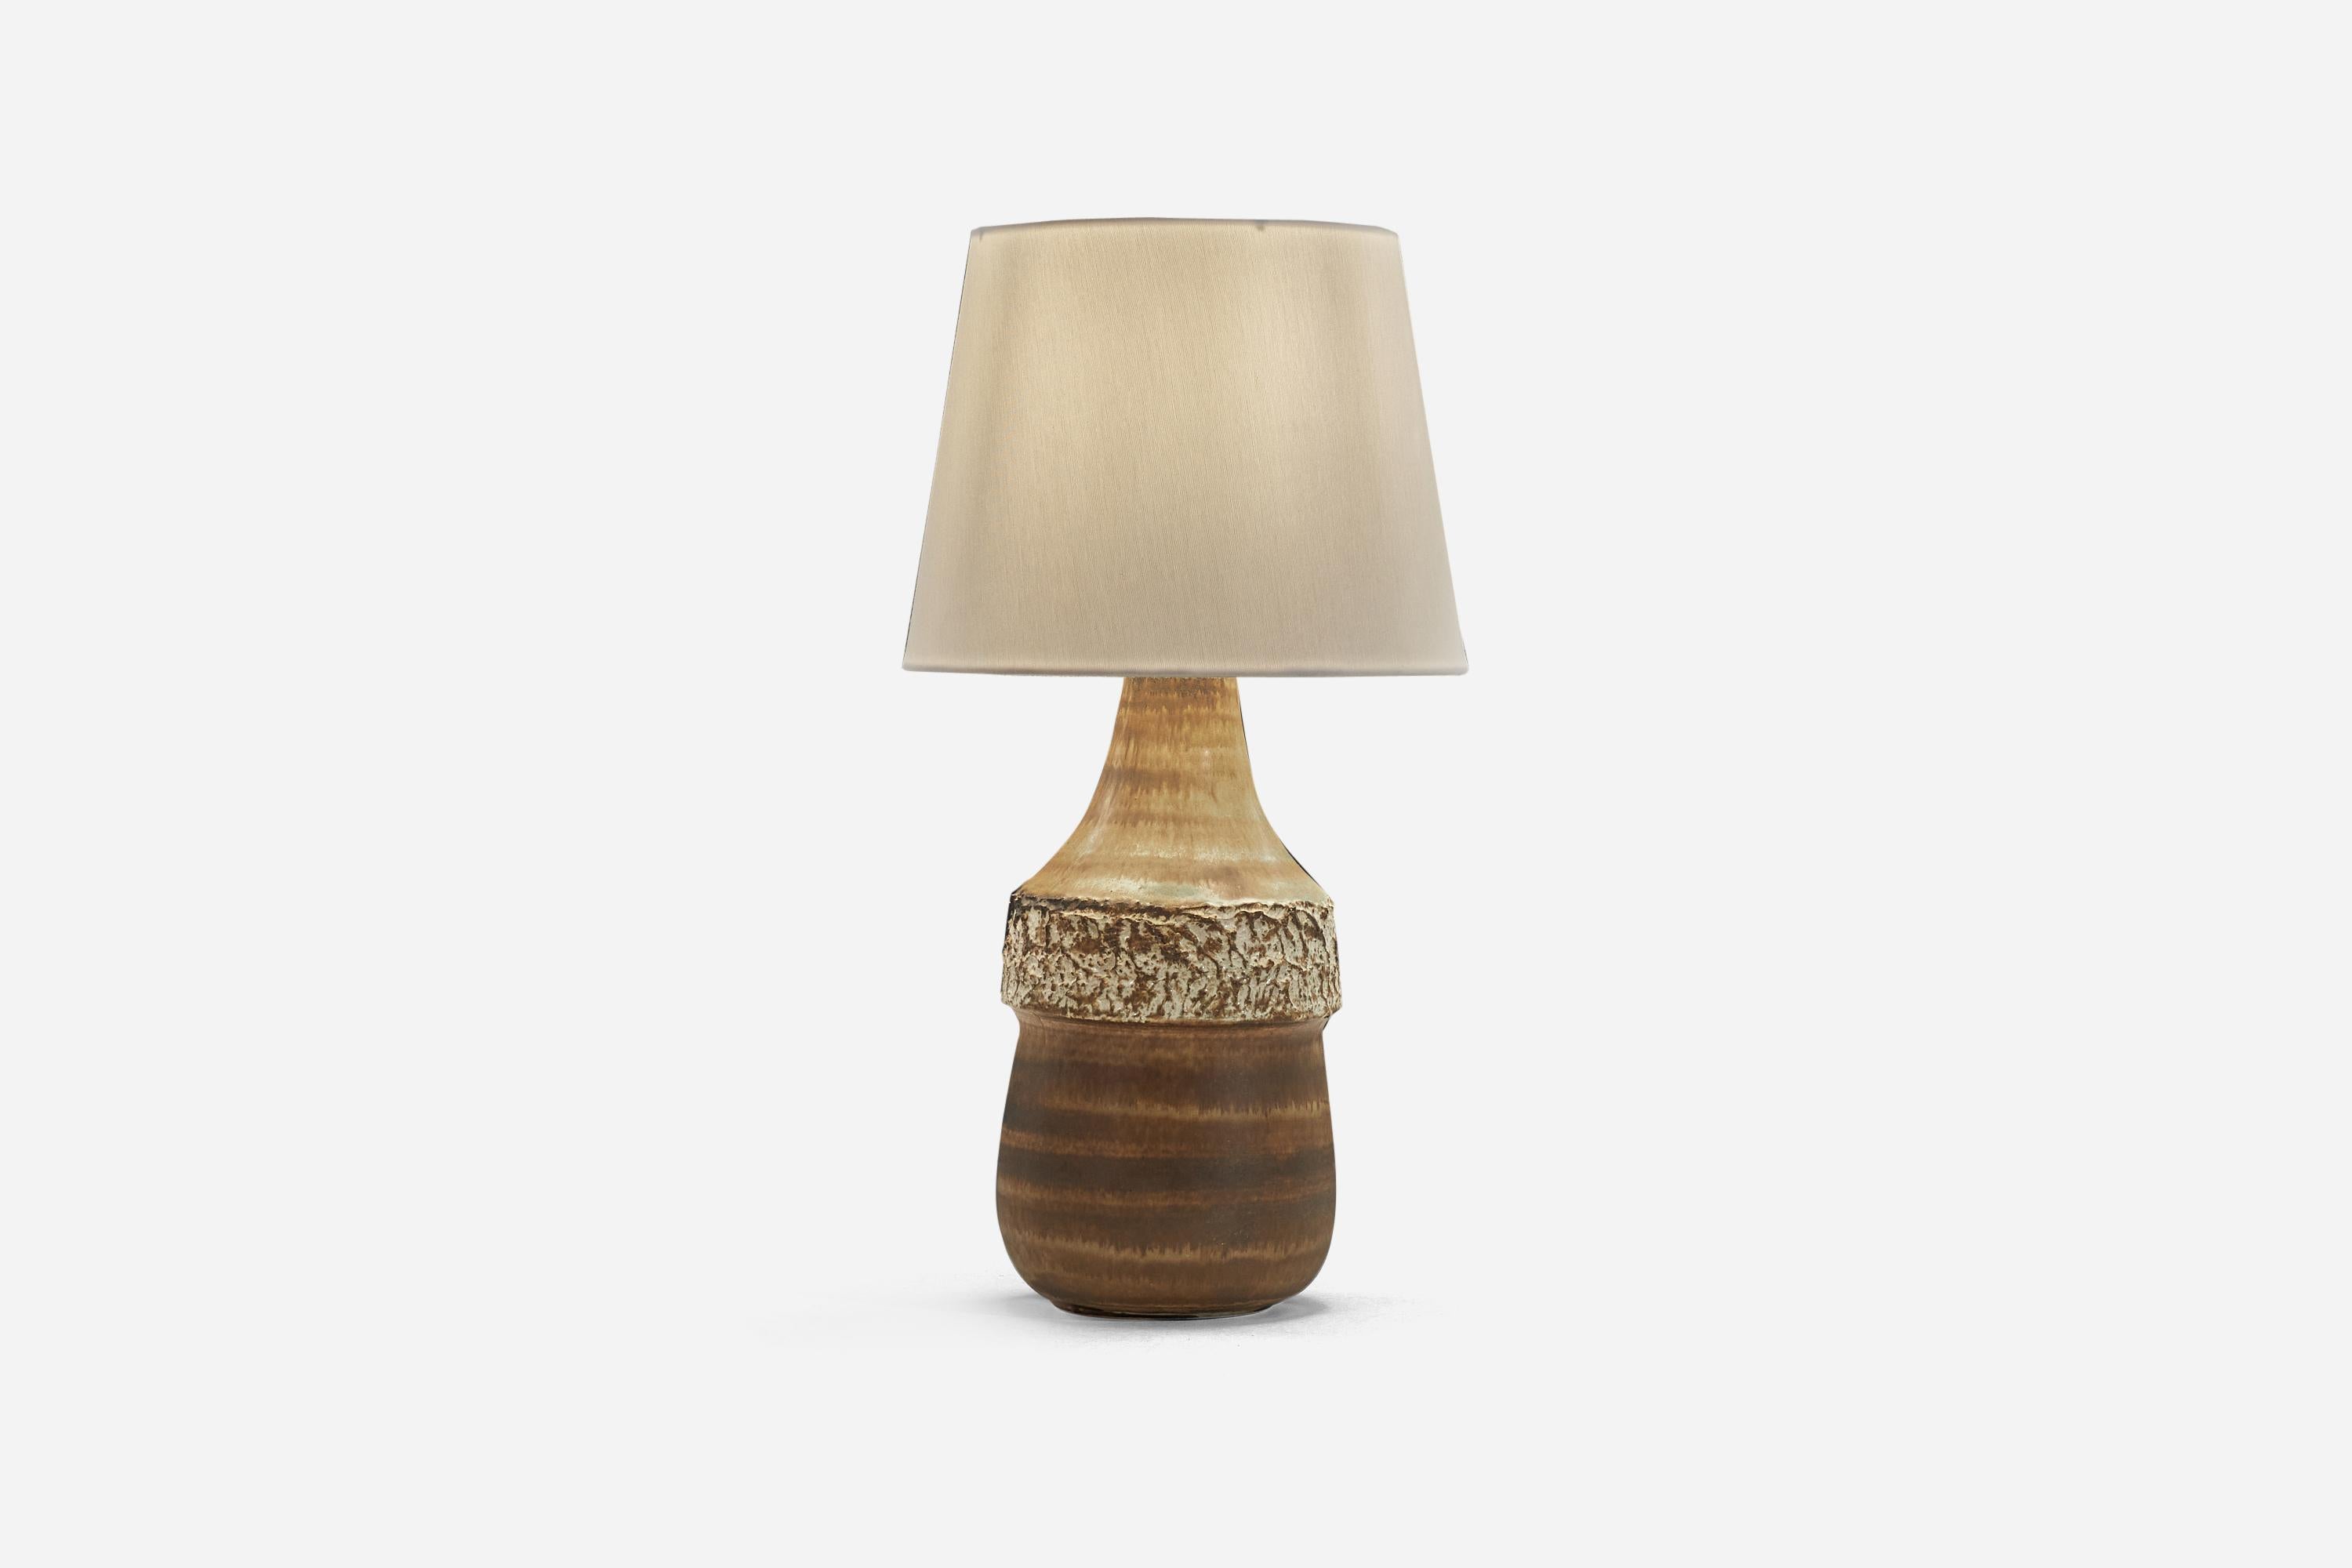 Swedish Bruno Karlsson, Table Lamp, Brown-Glazed Stoneware, Studio Ego, Sweden, 1960s For Sale